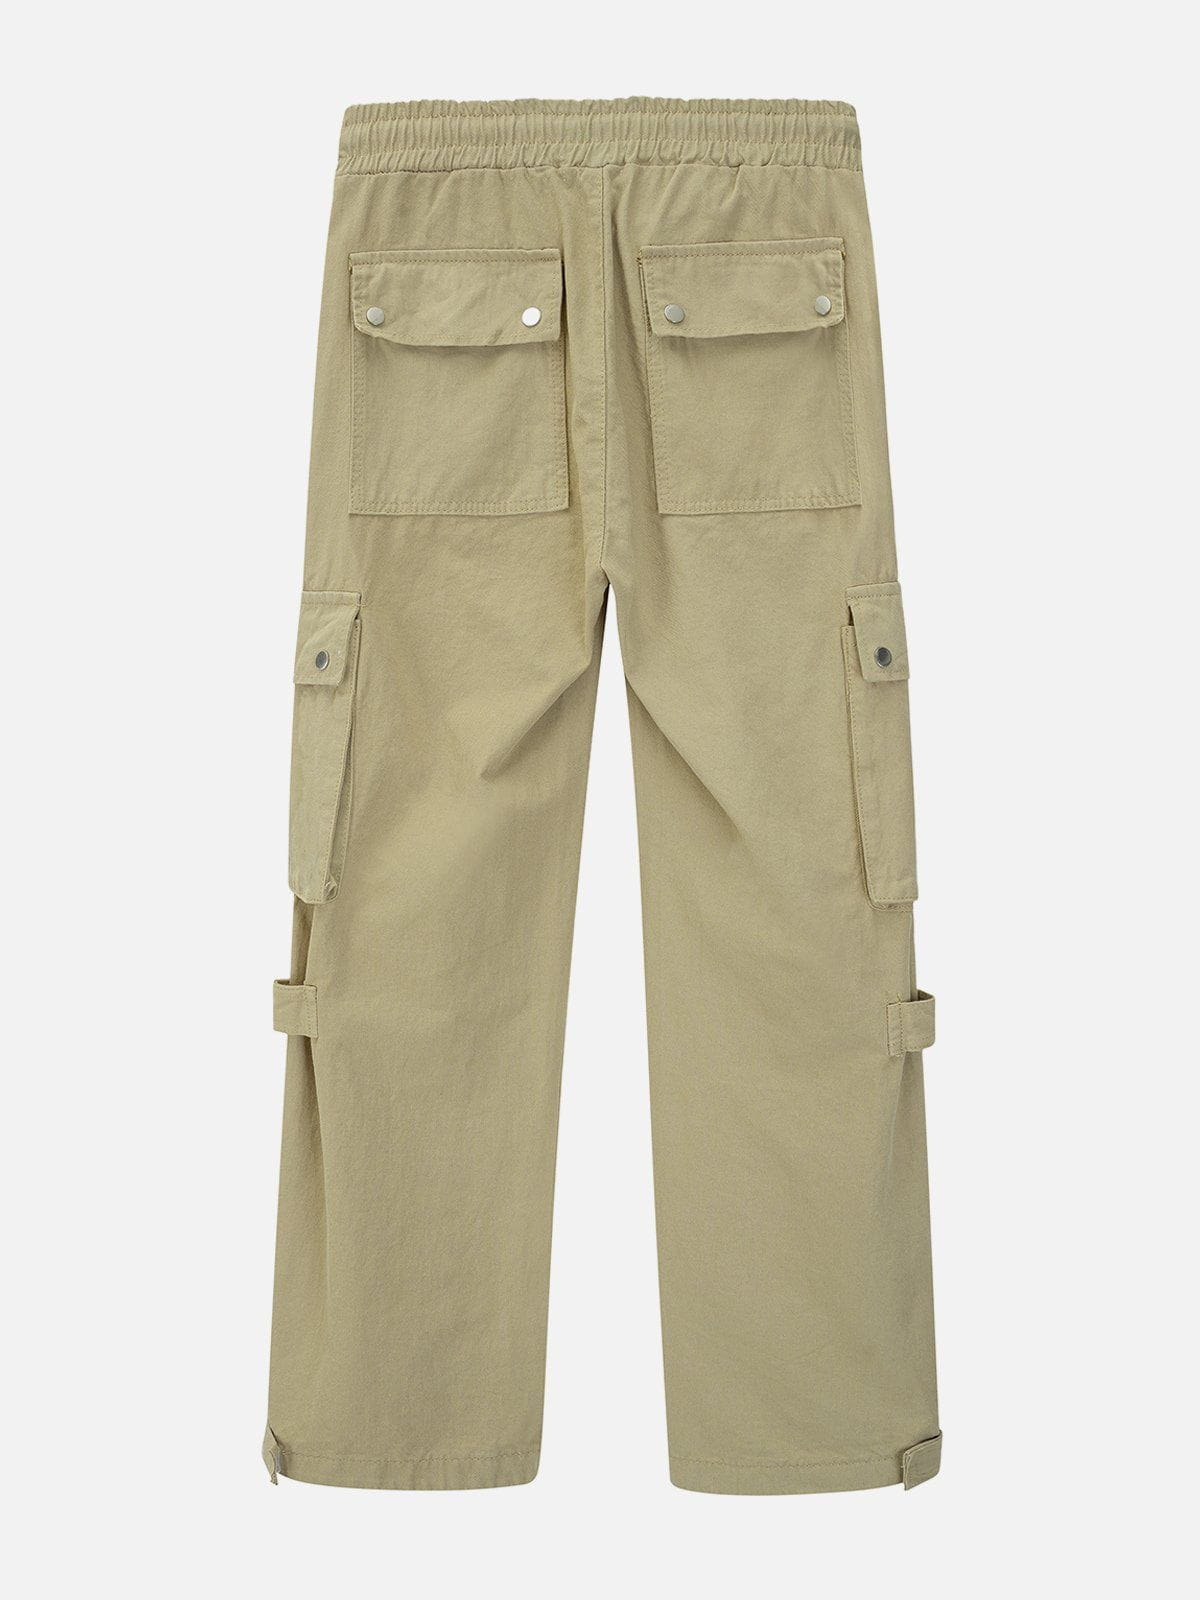 Sneakerland® - Multi-pocket Technical Zip Cargo Pants